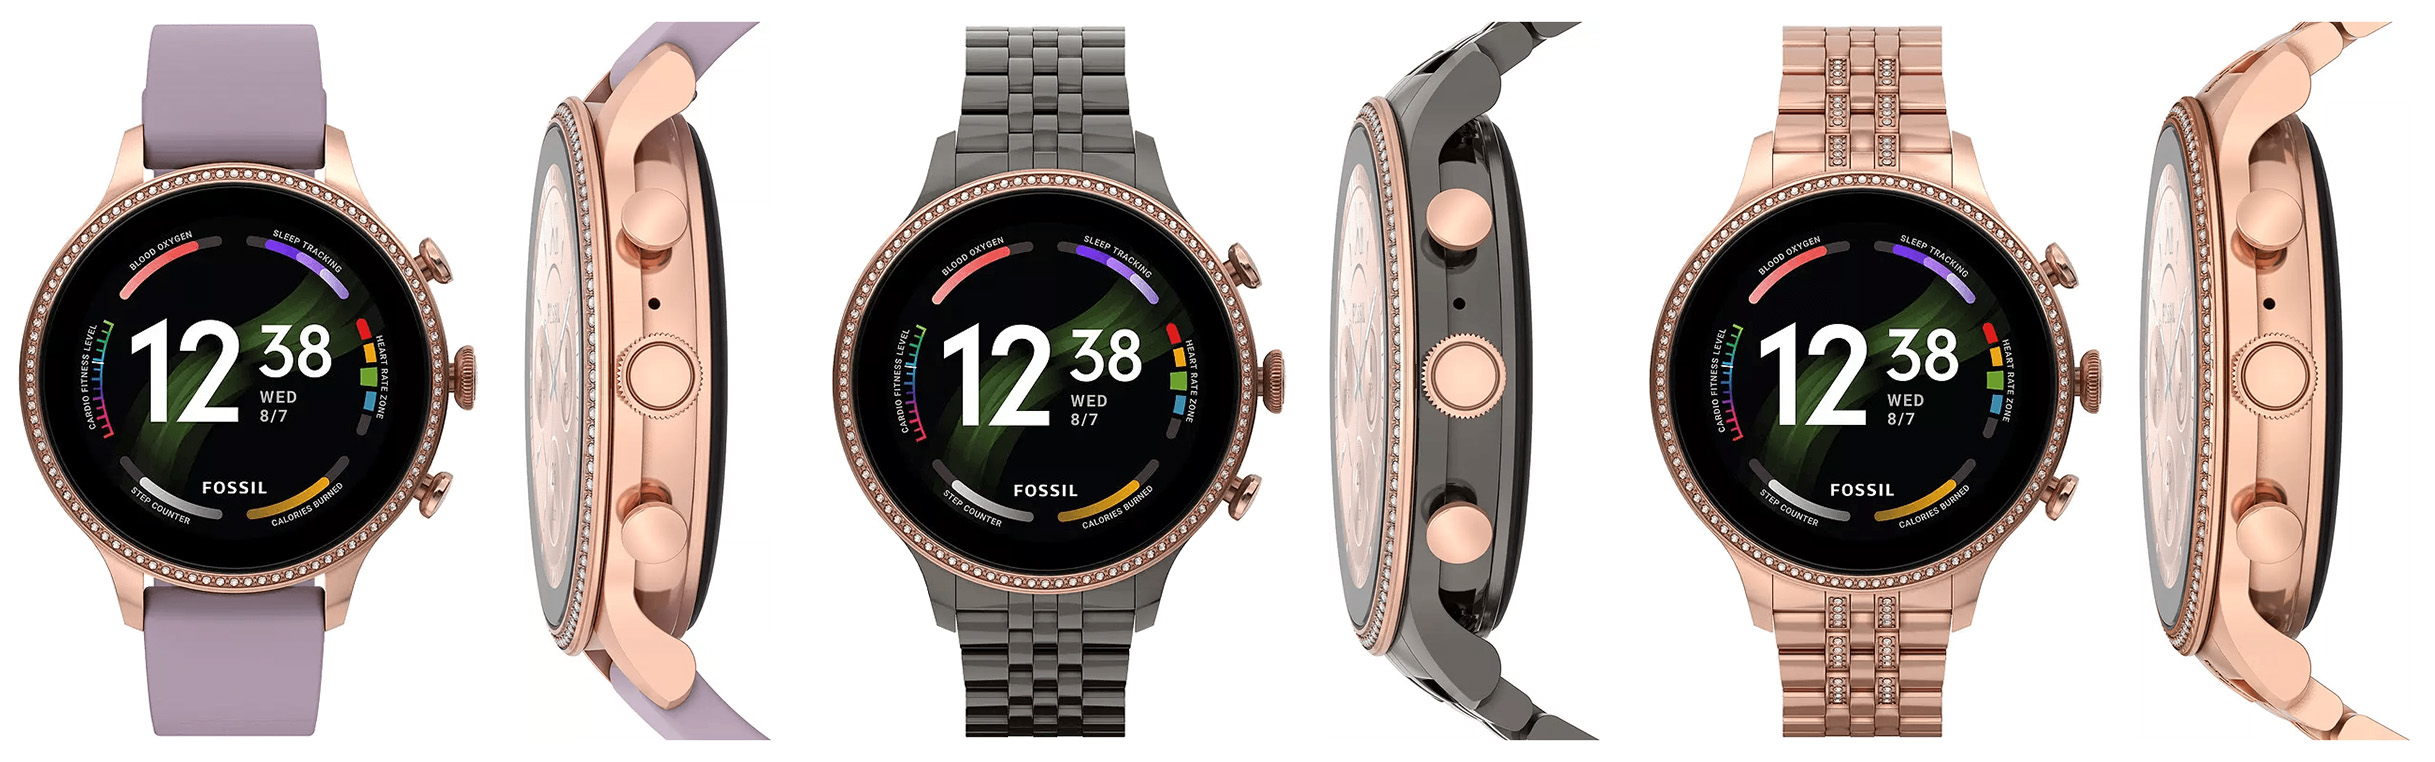 Fossil Gen 6 smartwatch leaks with Snapdragon 4100 Plus